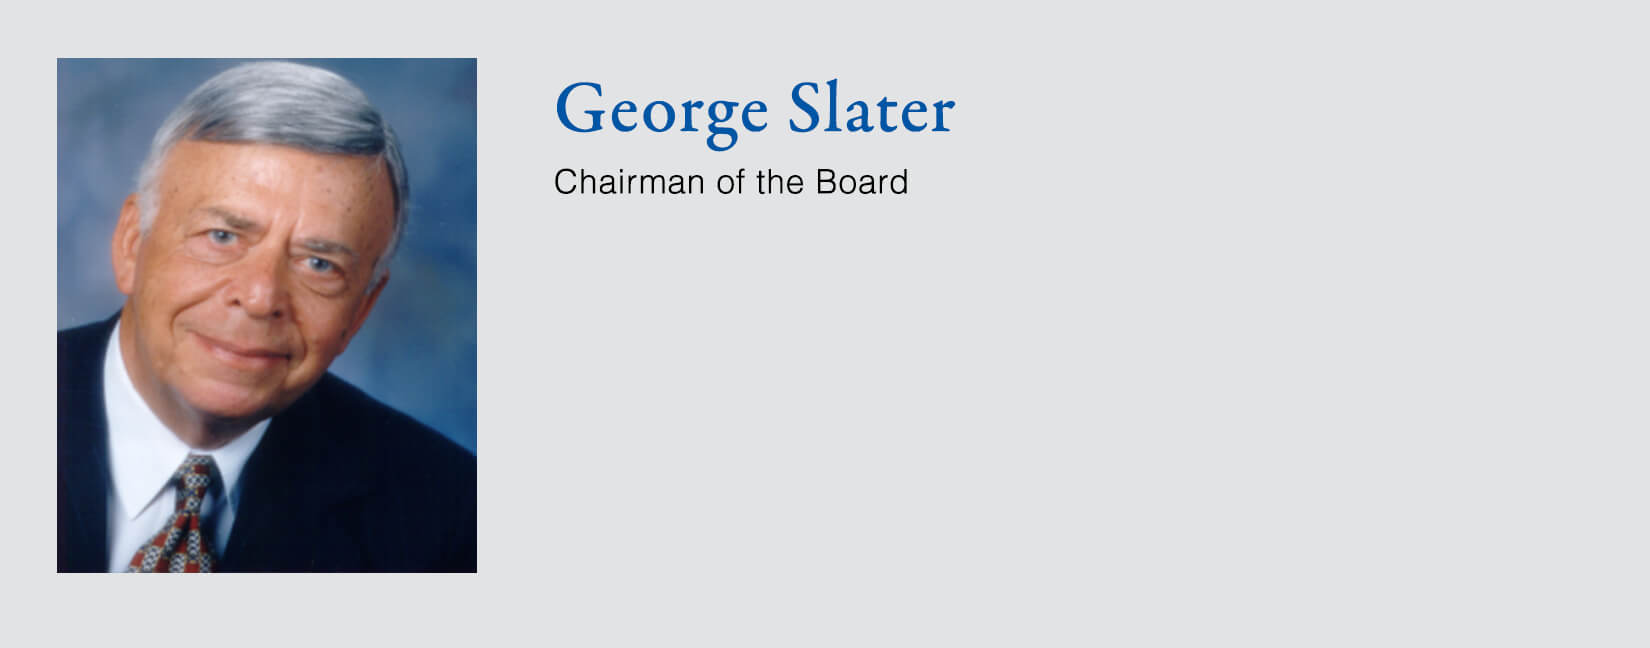 George Slater Chairman of the Board - Marine Bank